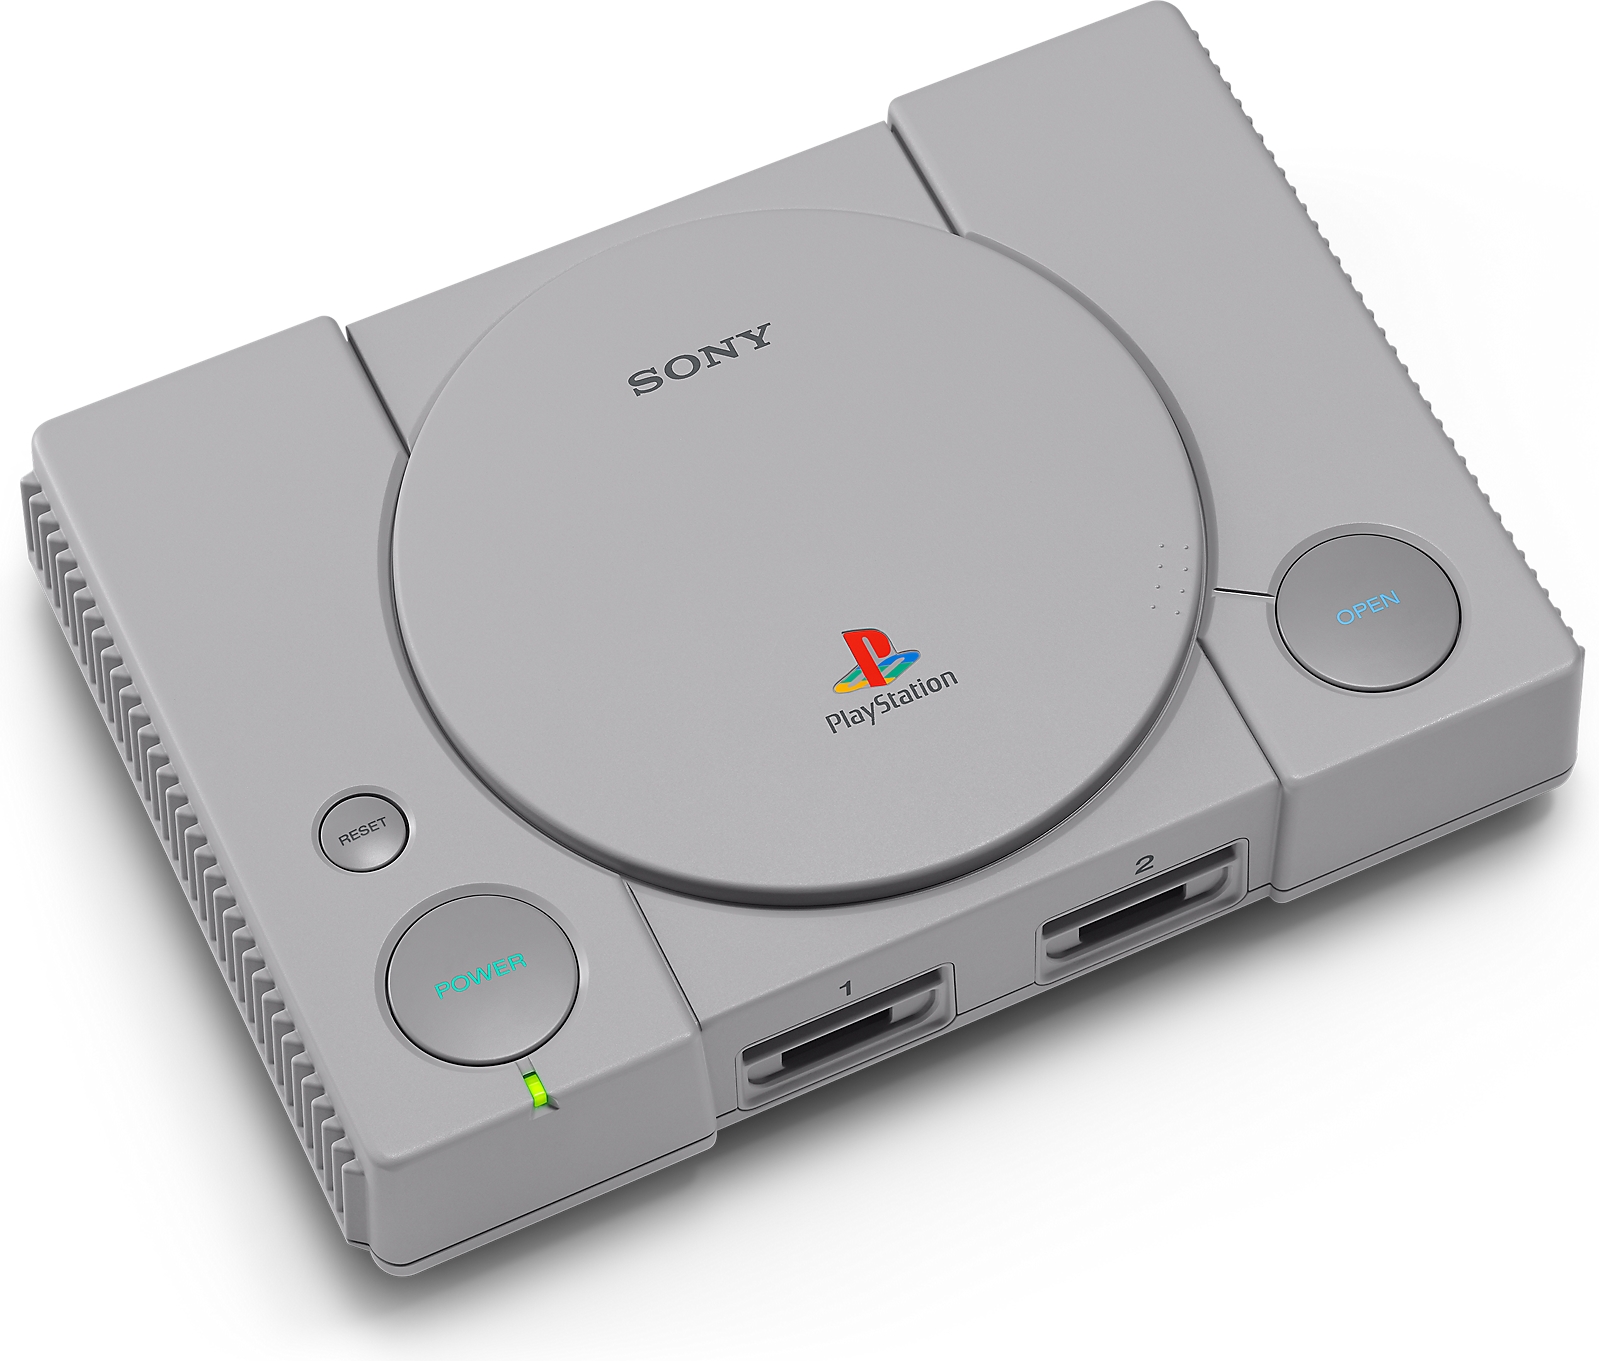 Sony Playstation 1 classic